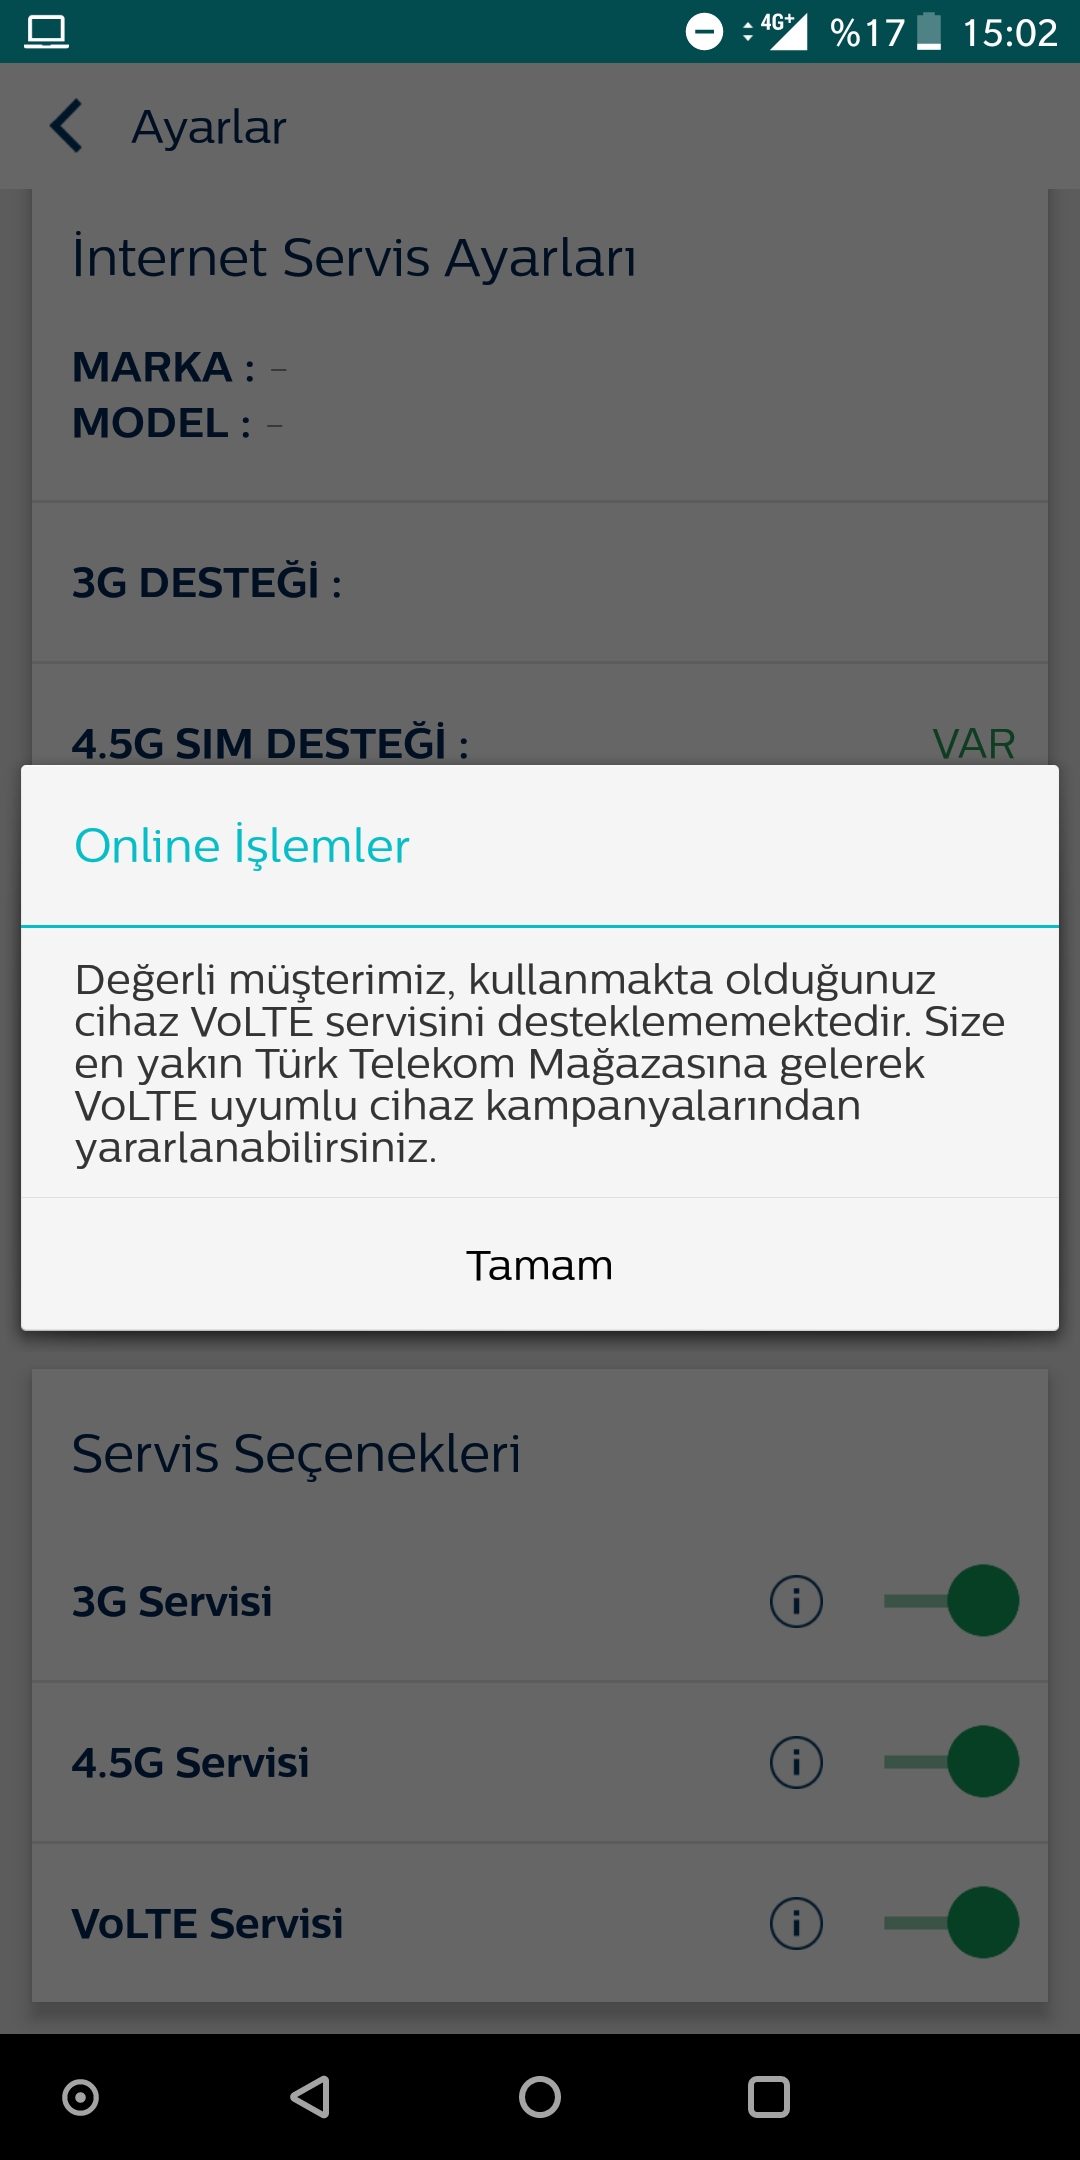 Türk Telekom 4.5G ve Volte Sorunu - One Plus 5